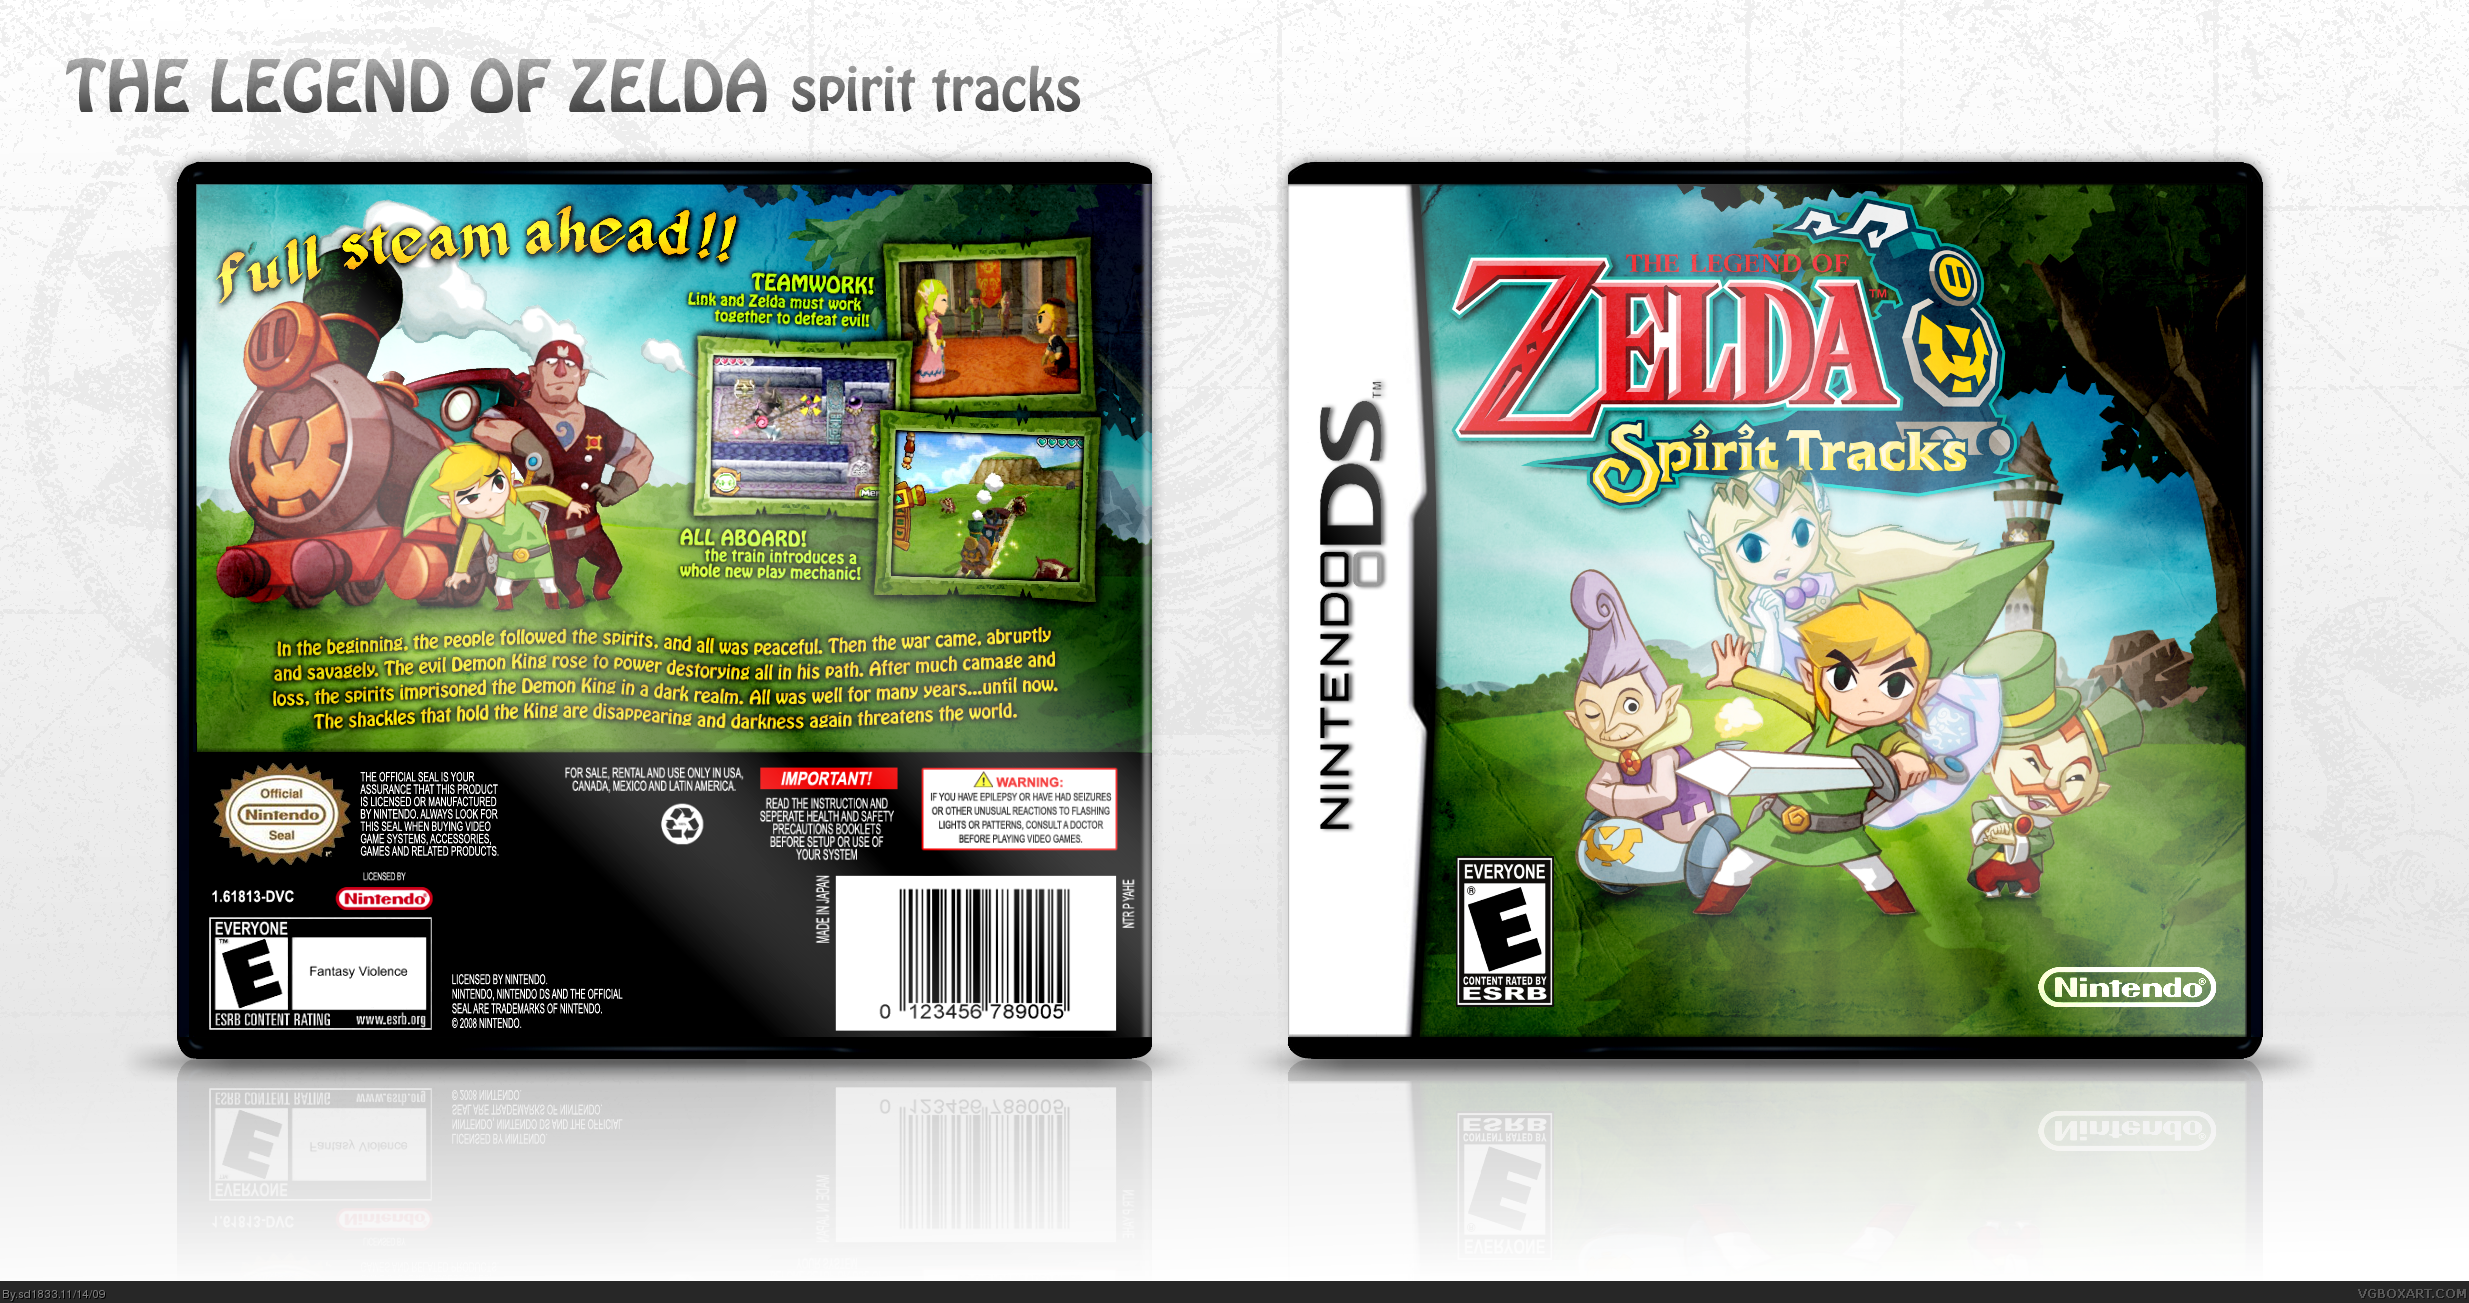 The Legend of Zelda: Spirit Tracks box cover